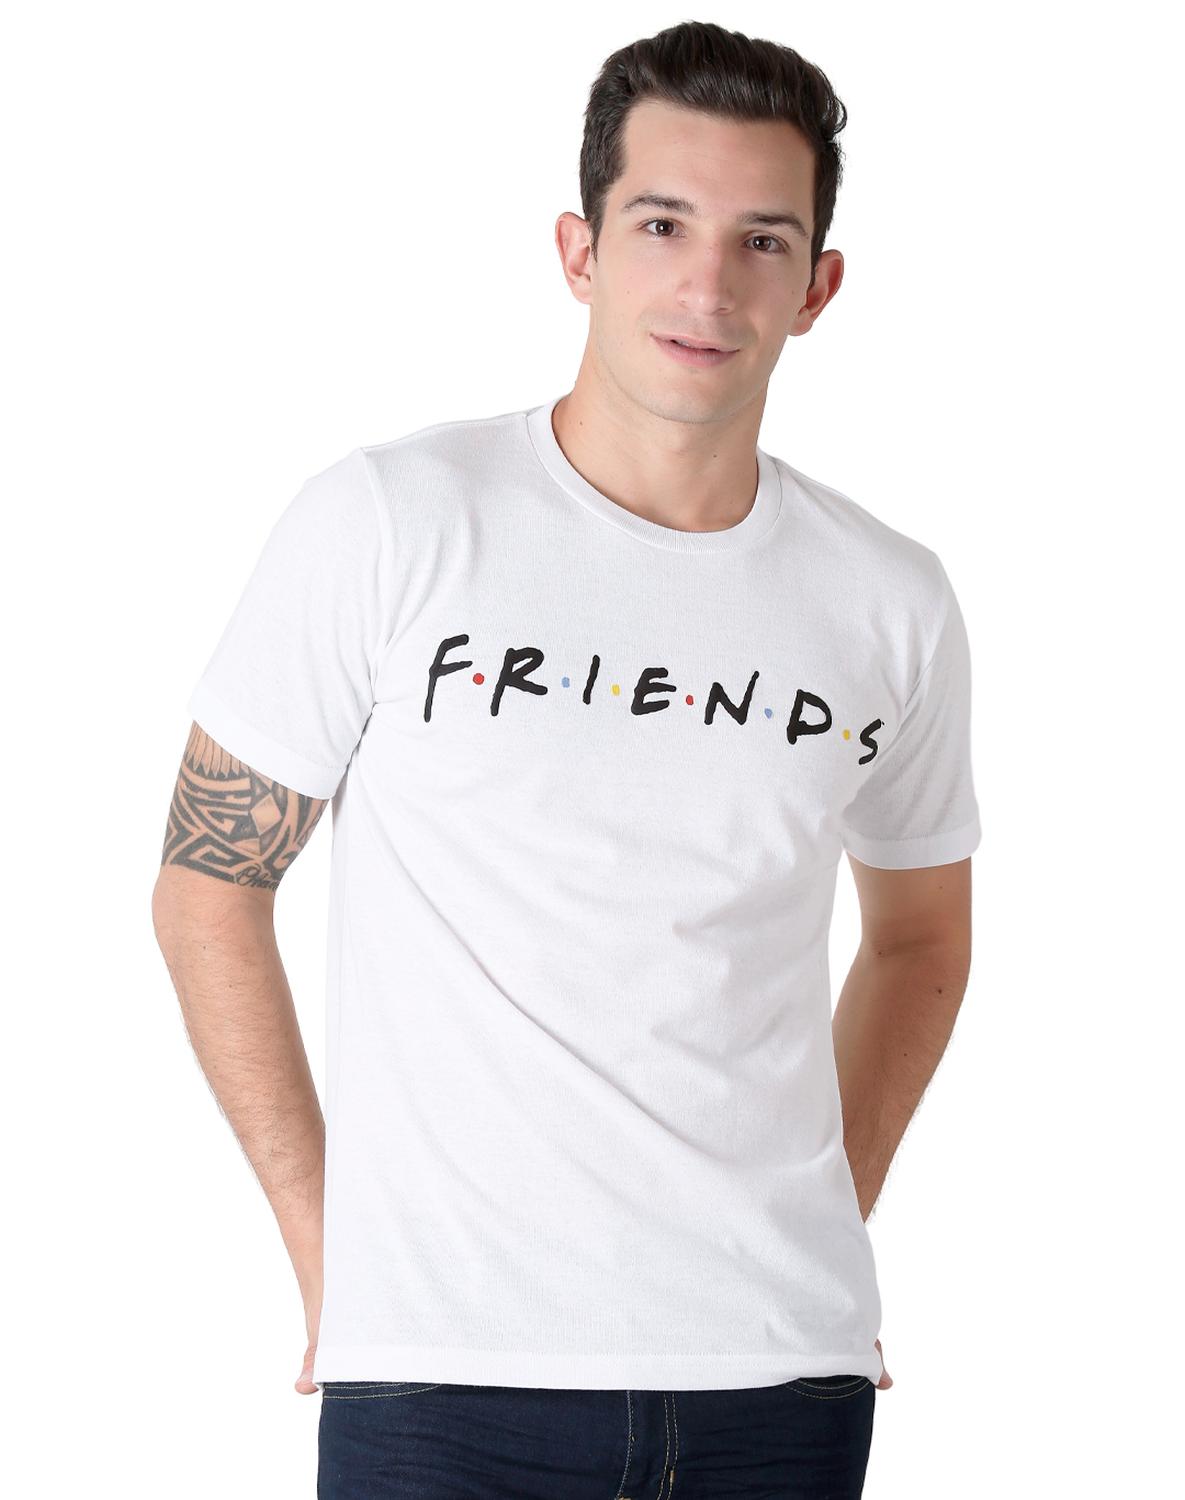 Playera Moda Camiseta Hombre Blanco Friends 58204822